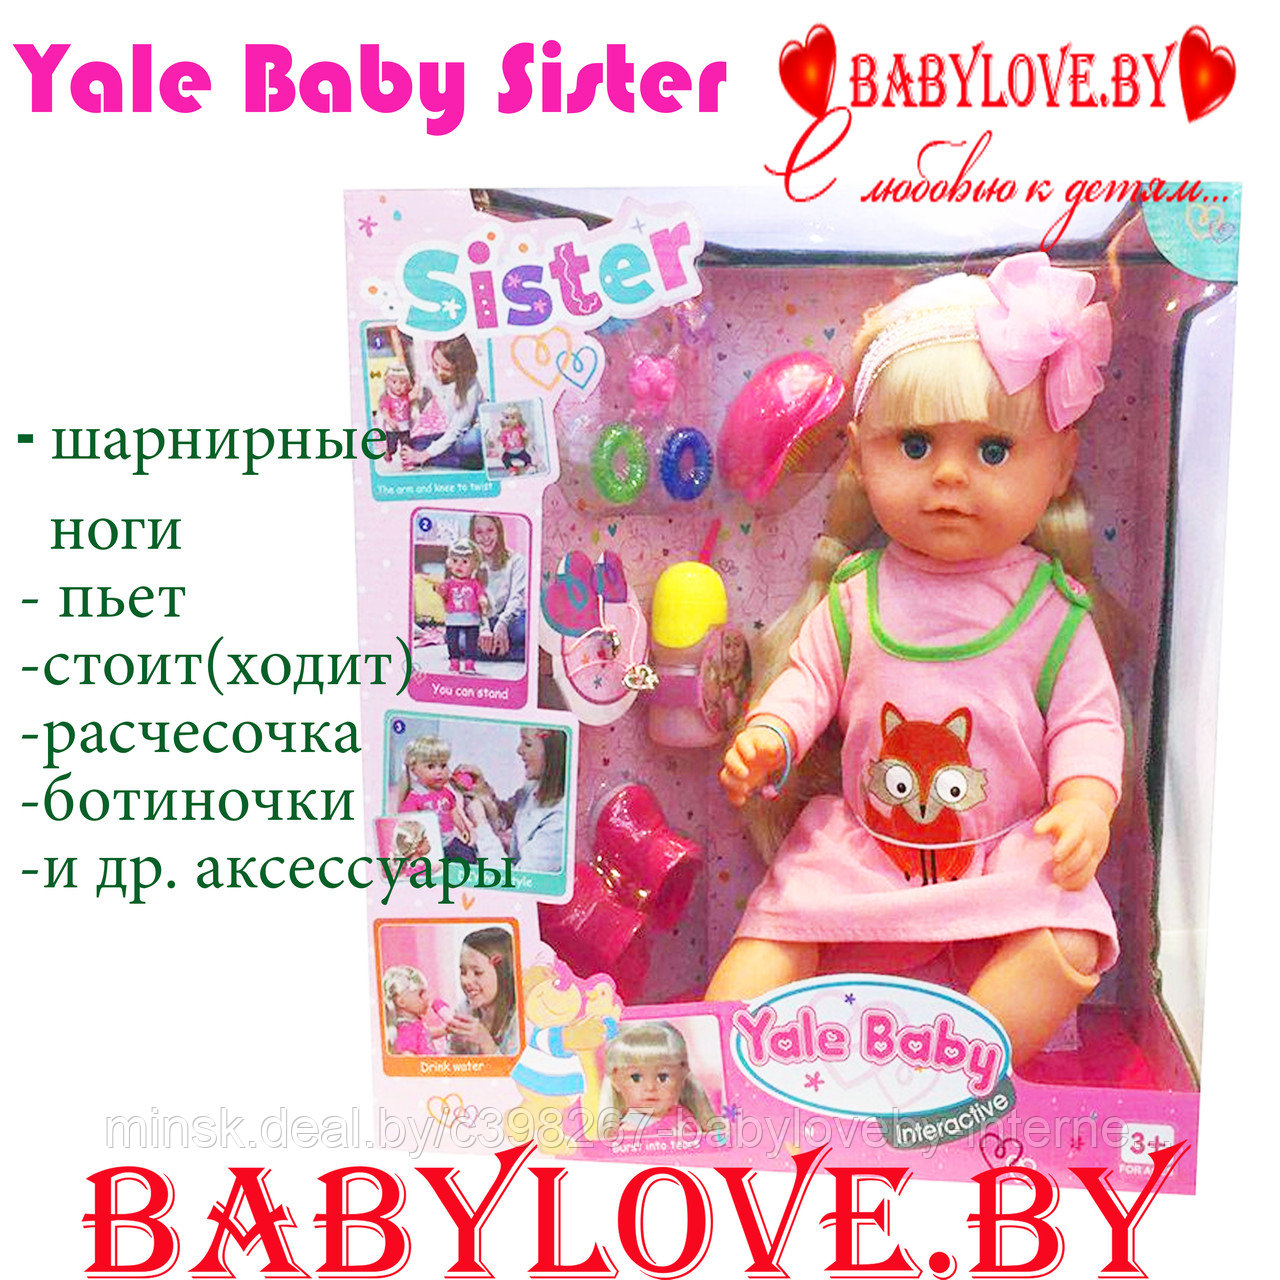 Кукла интерактивная My Little Yale Baby Sister старшая сестра Бэби борн аналог Zapf Creation